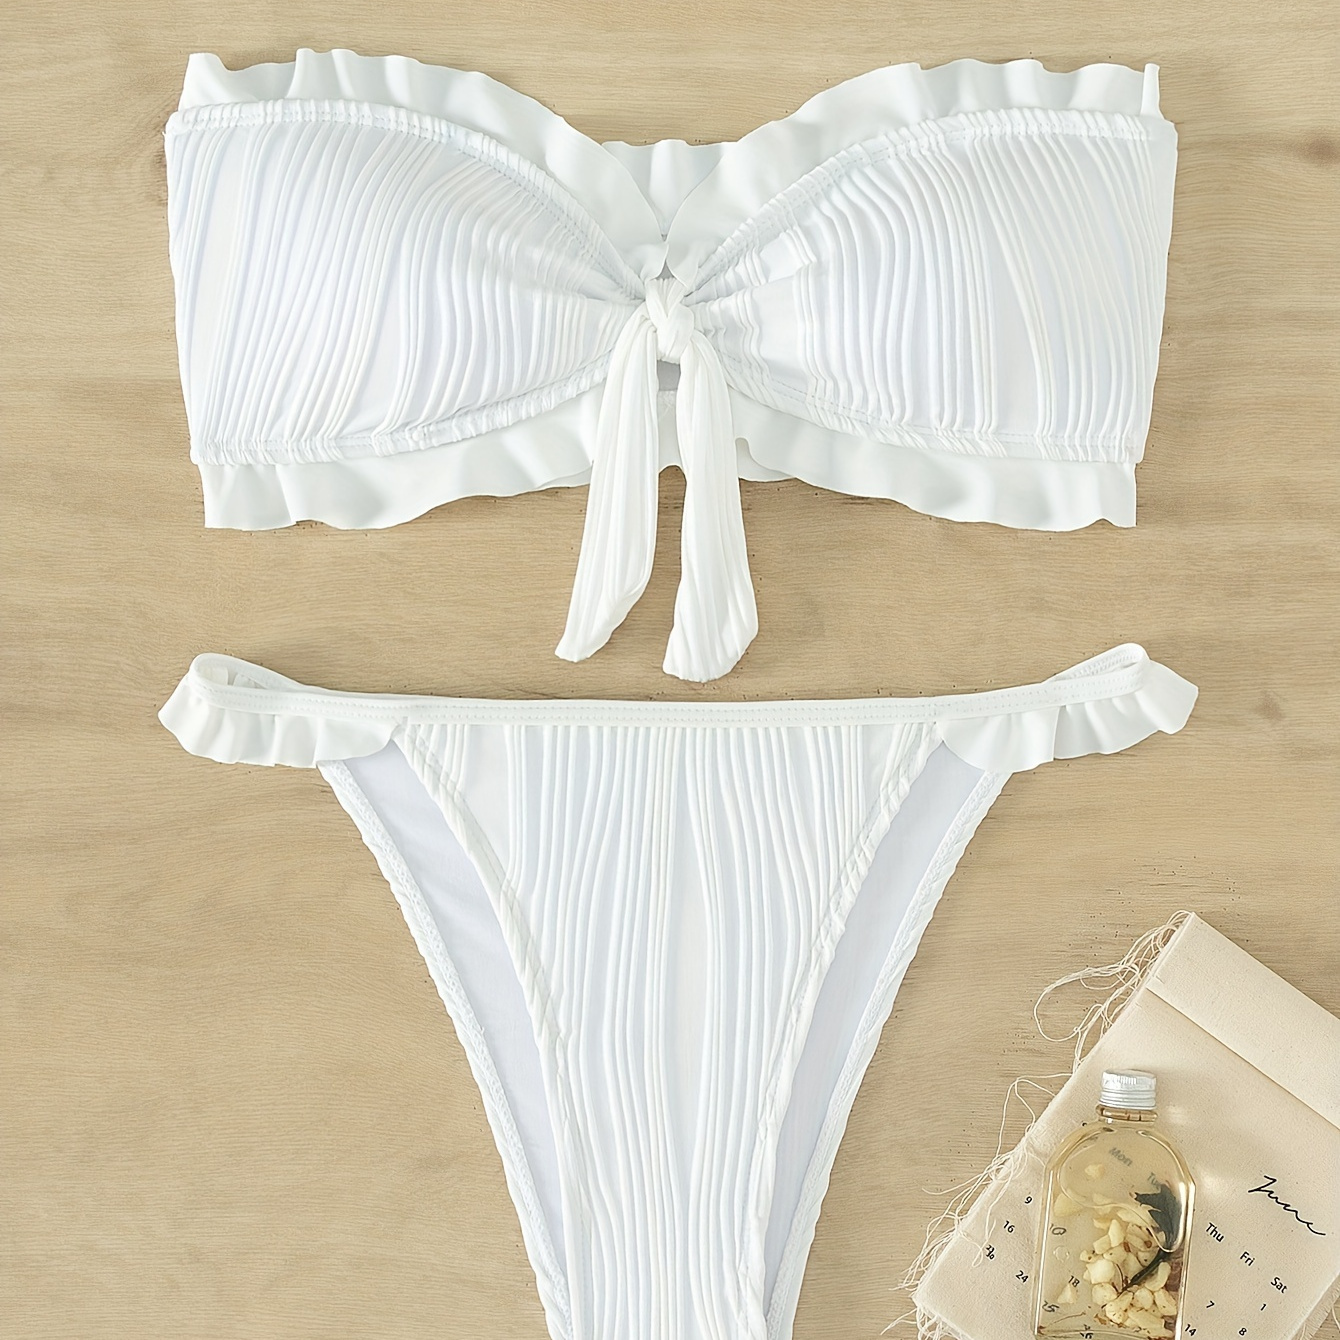 

Texture Fabric Ruffle Knot 2 Piece Set Bikini, Bandeau Plain White Stretchy Swimsuits, Women's Swimwear & Clothing